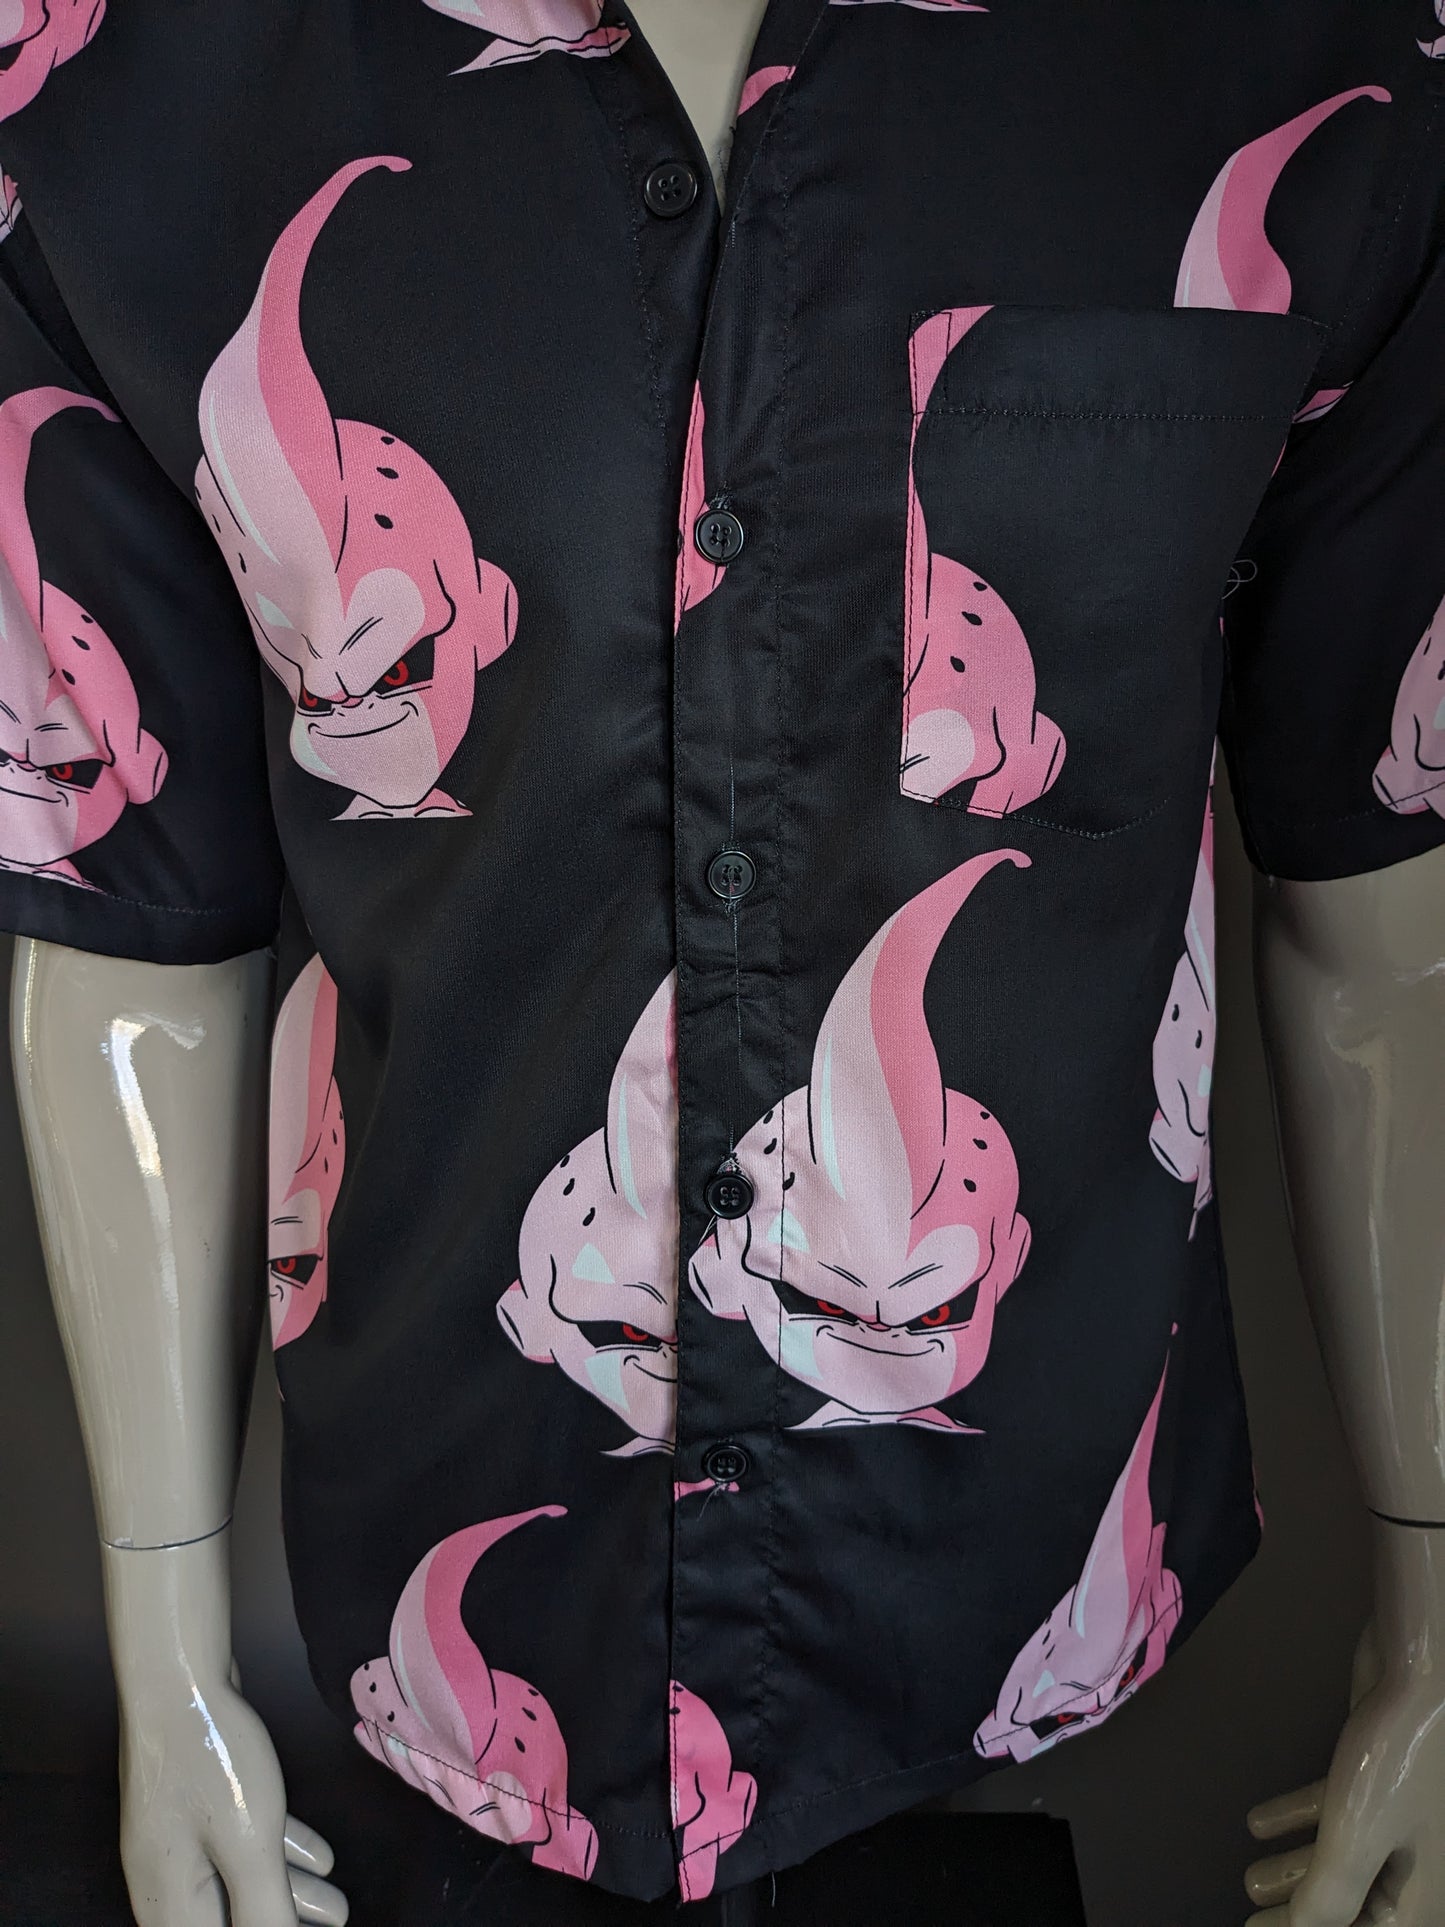 Dragon Ball Z Kid Buu Shirt. Stampa rosa nero. Taglia M.